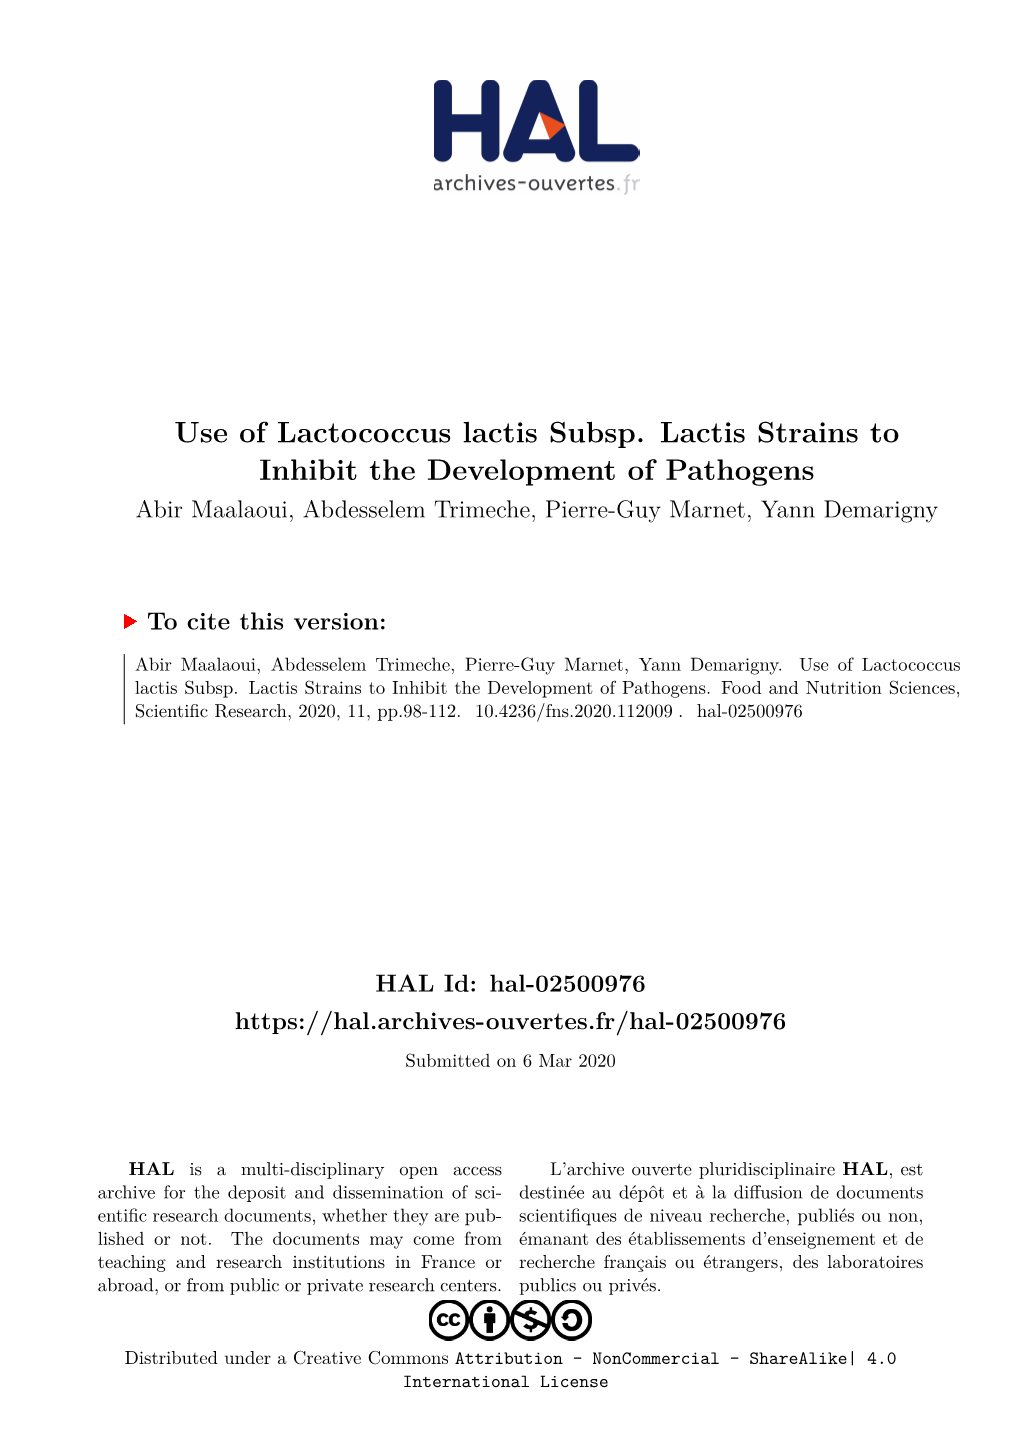 Use of Lactococcus Lactis Subsp. Lactis Strains to Inhibit the Development of Pathogens Abir Maalaoui, Abdesselem Trimeche, Pierre-Guy Marnet, Yann Demarigny